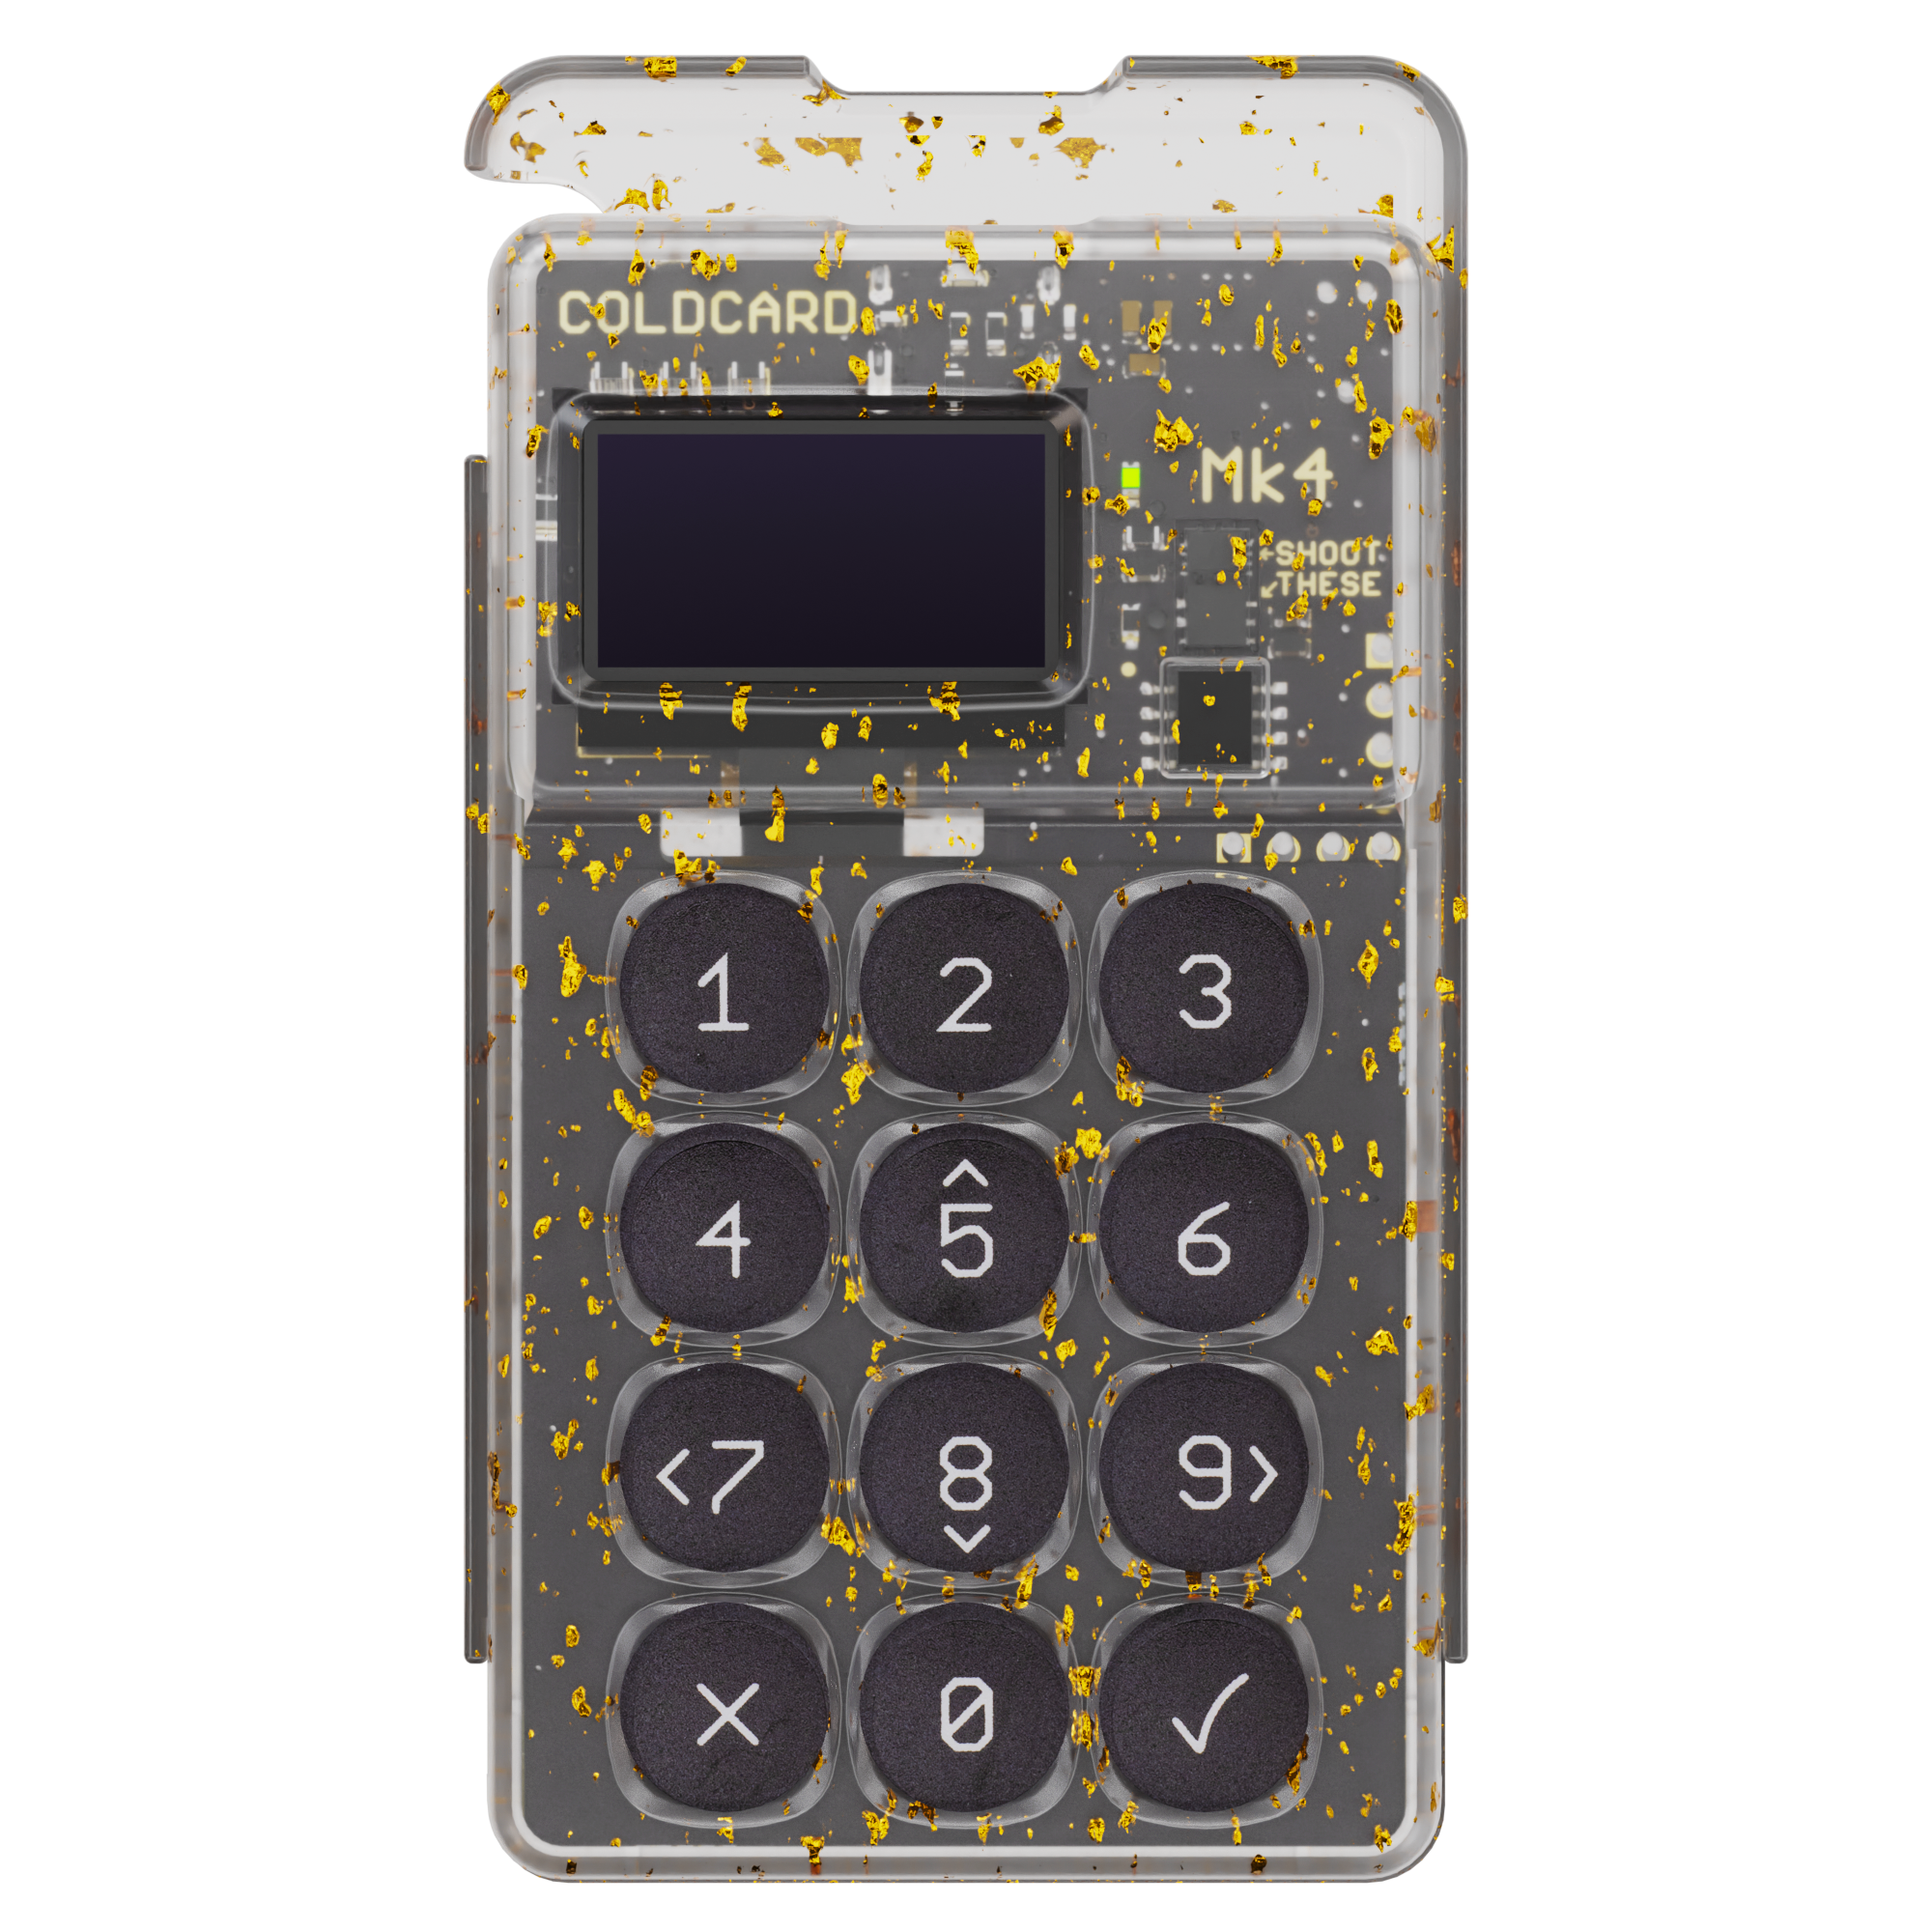 Аппаратный hodl-биткоин кошелек Coldcard MK4 Gold с NFC